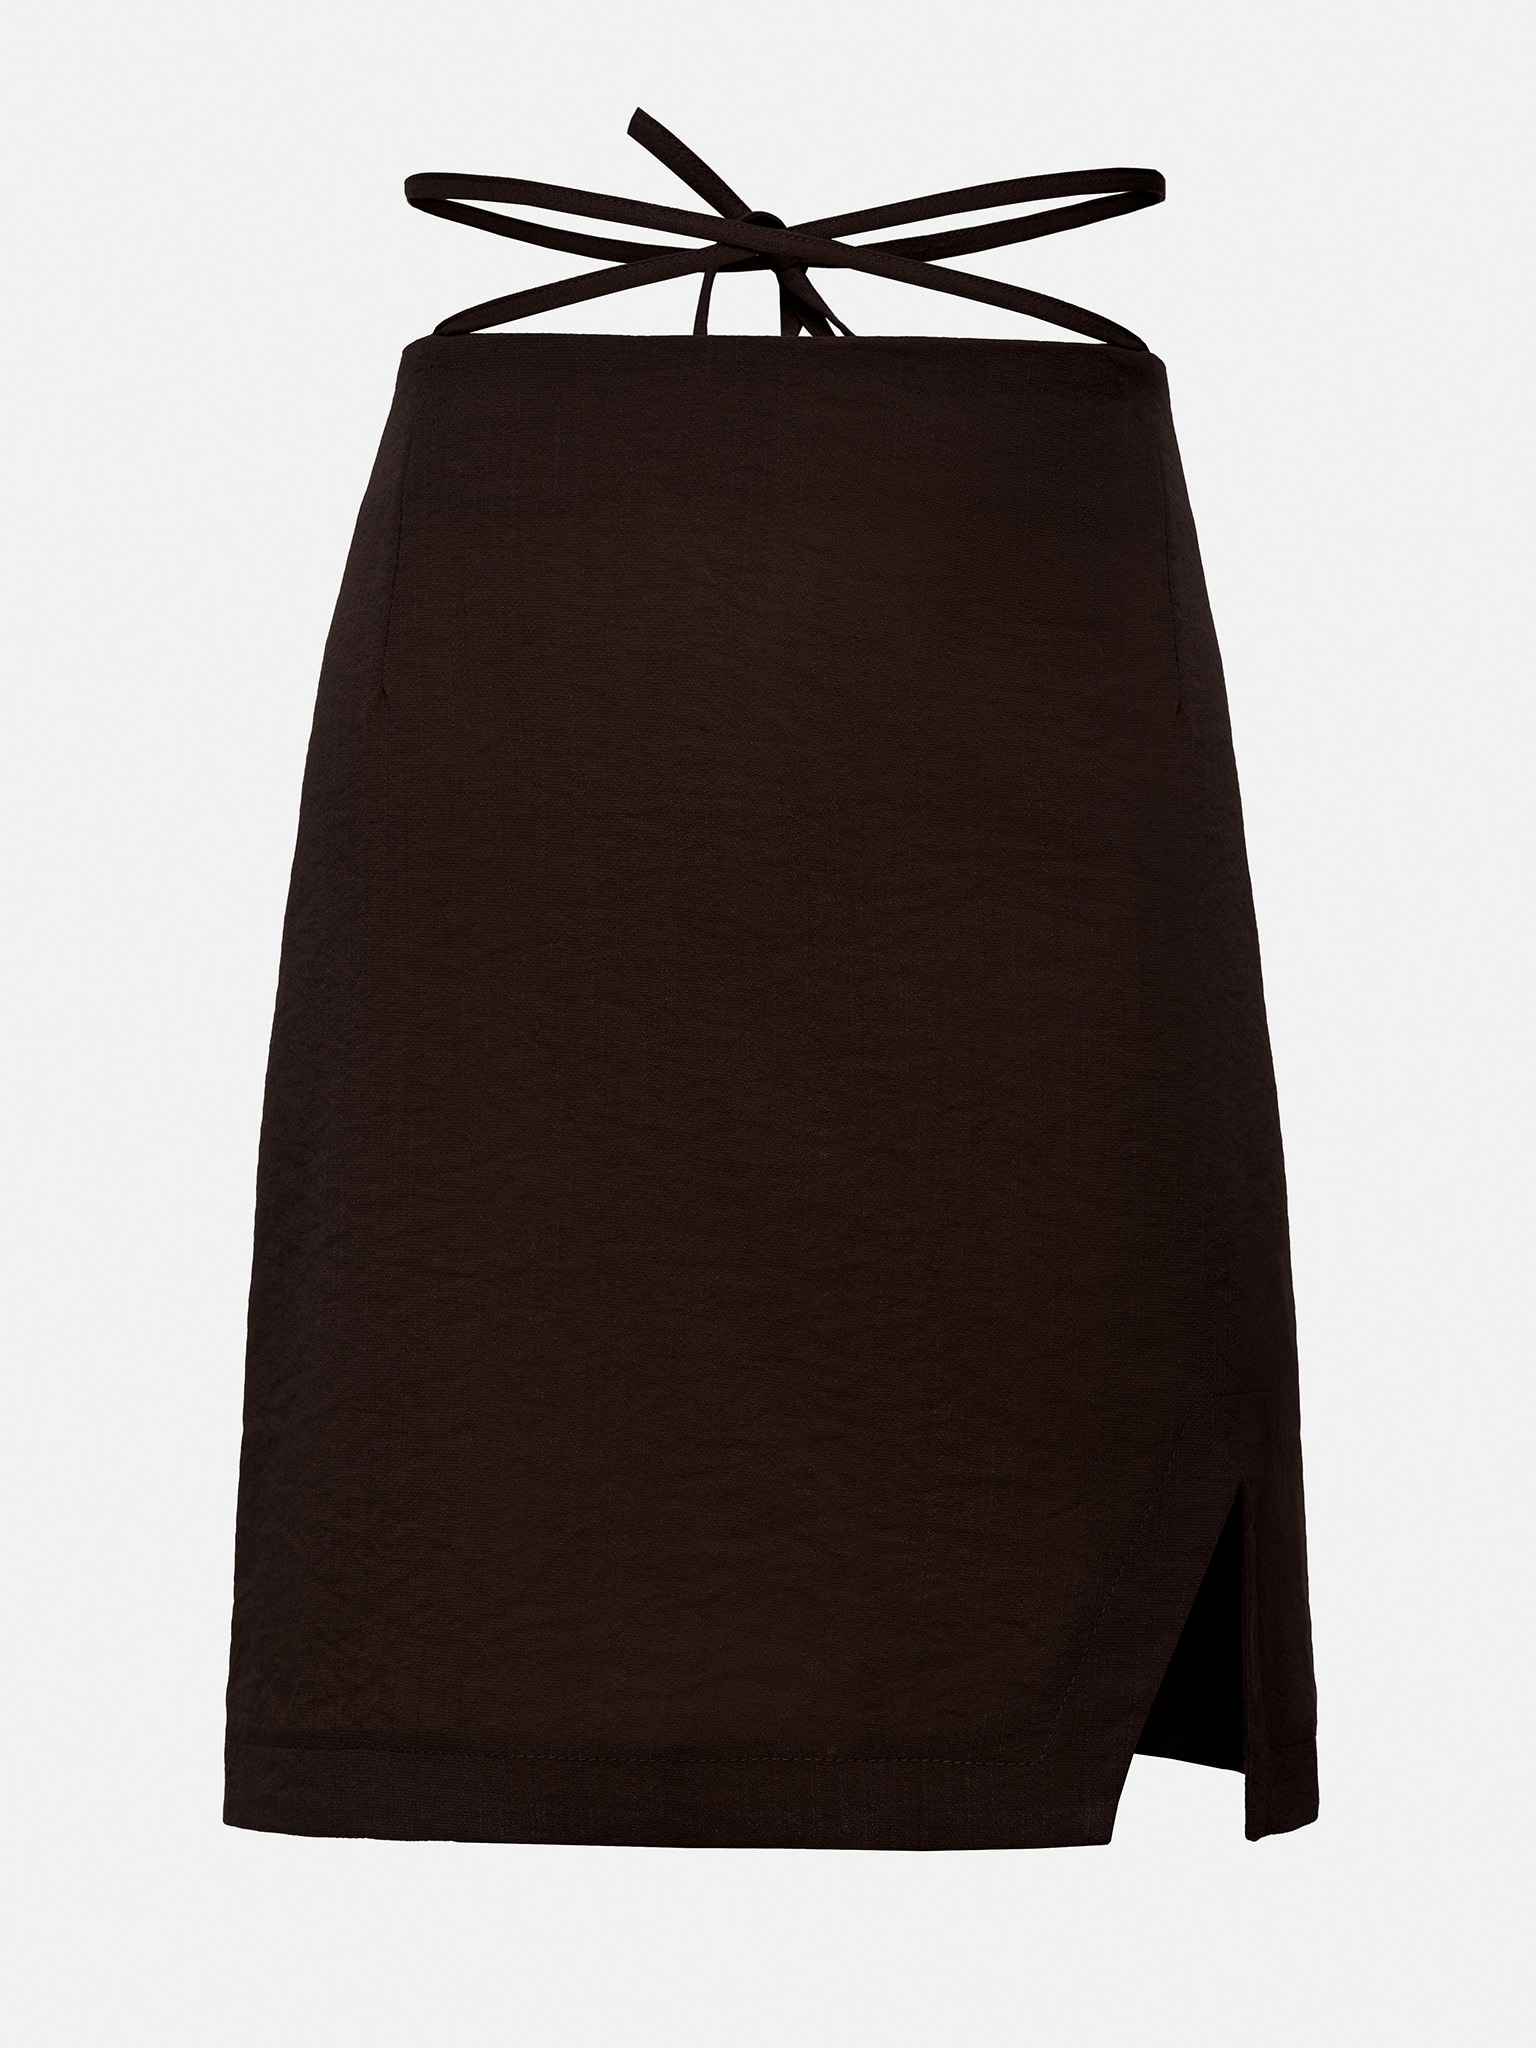 Прямая юбка мини с завязками на талии